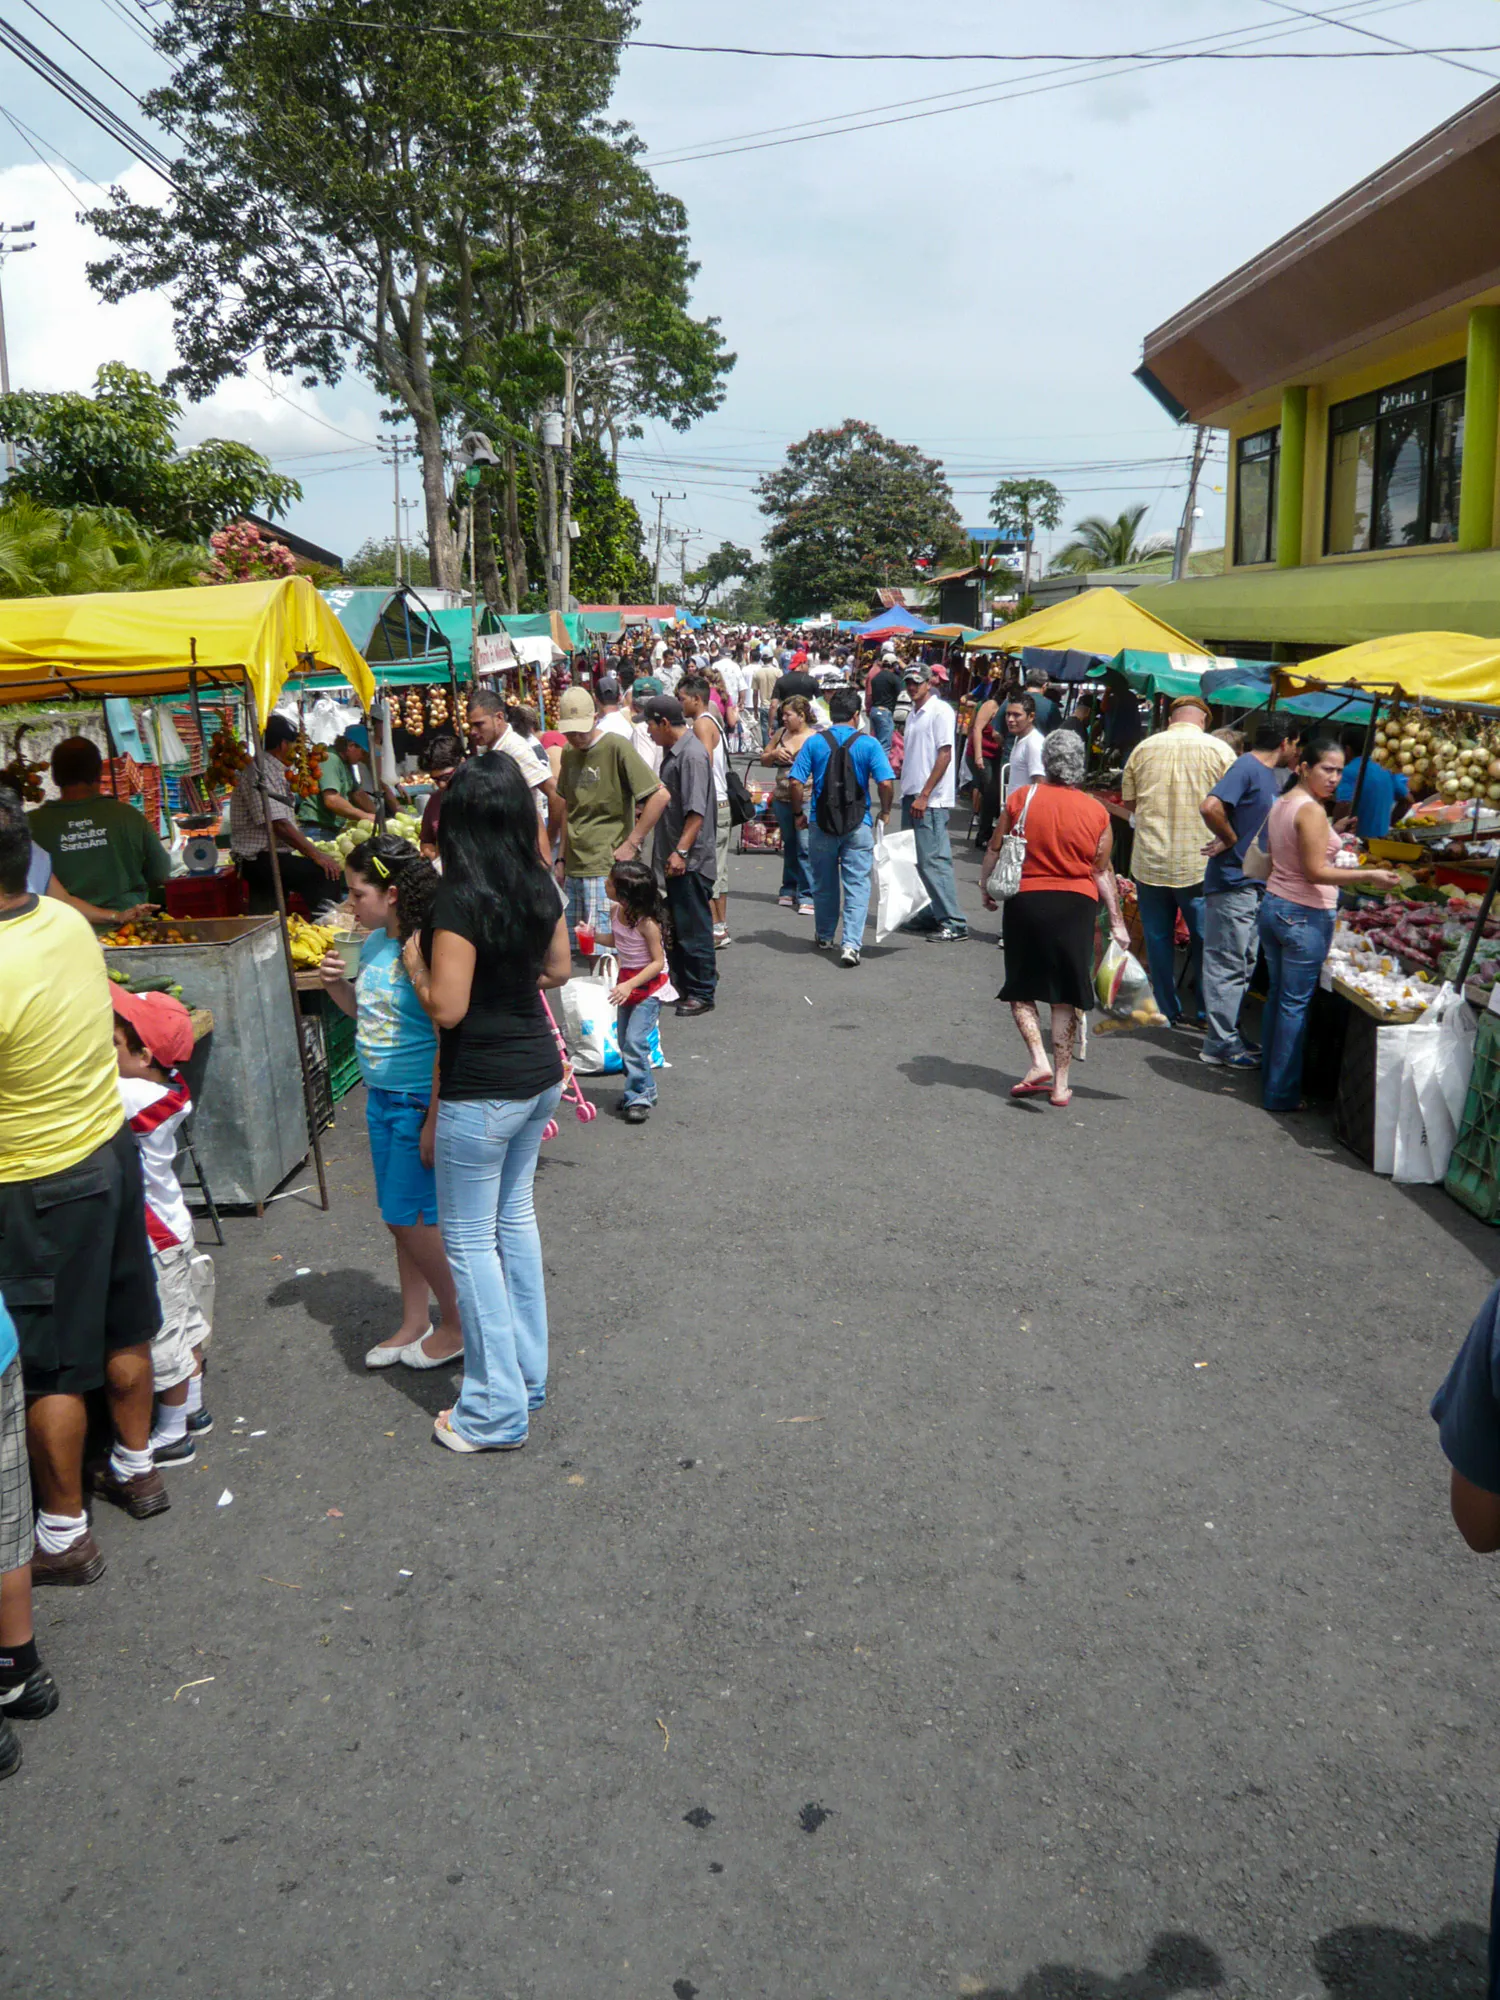 Saturday Market